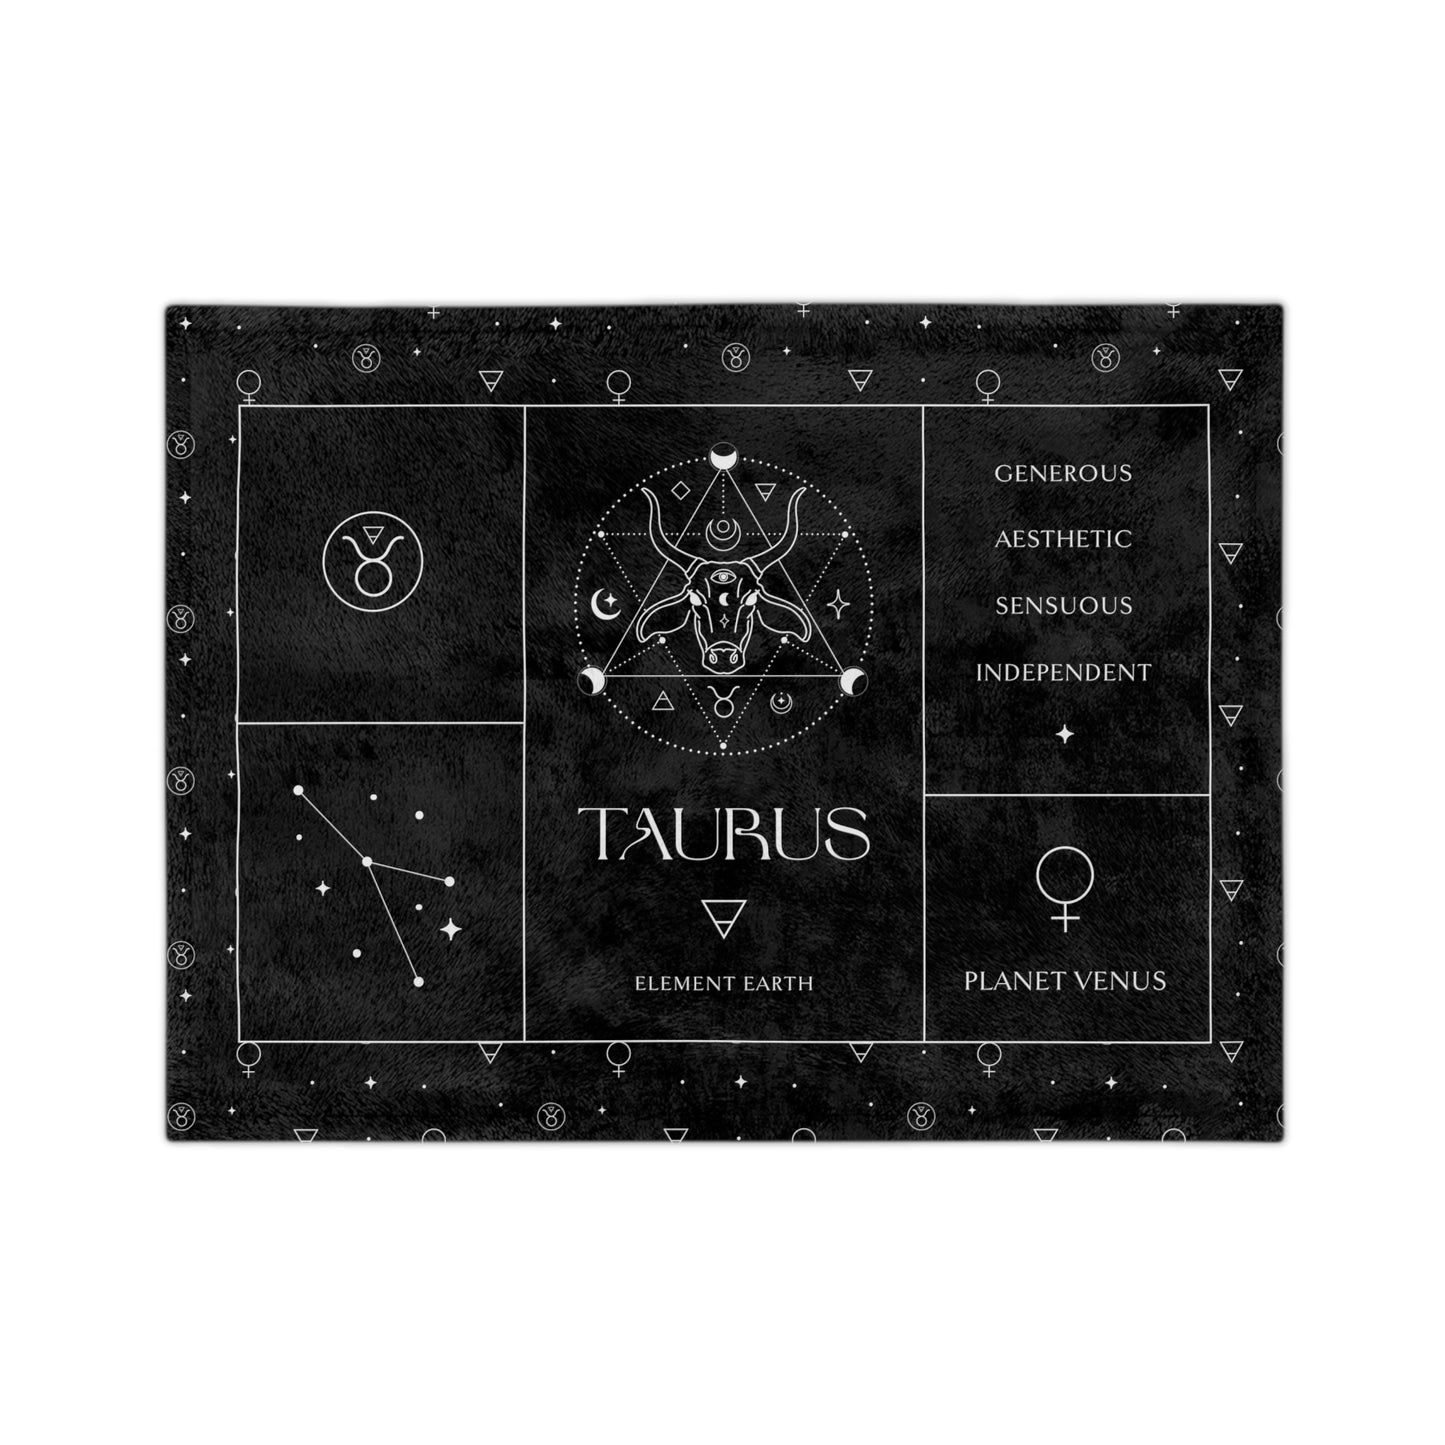 Taurus Zodiac Blanket